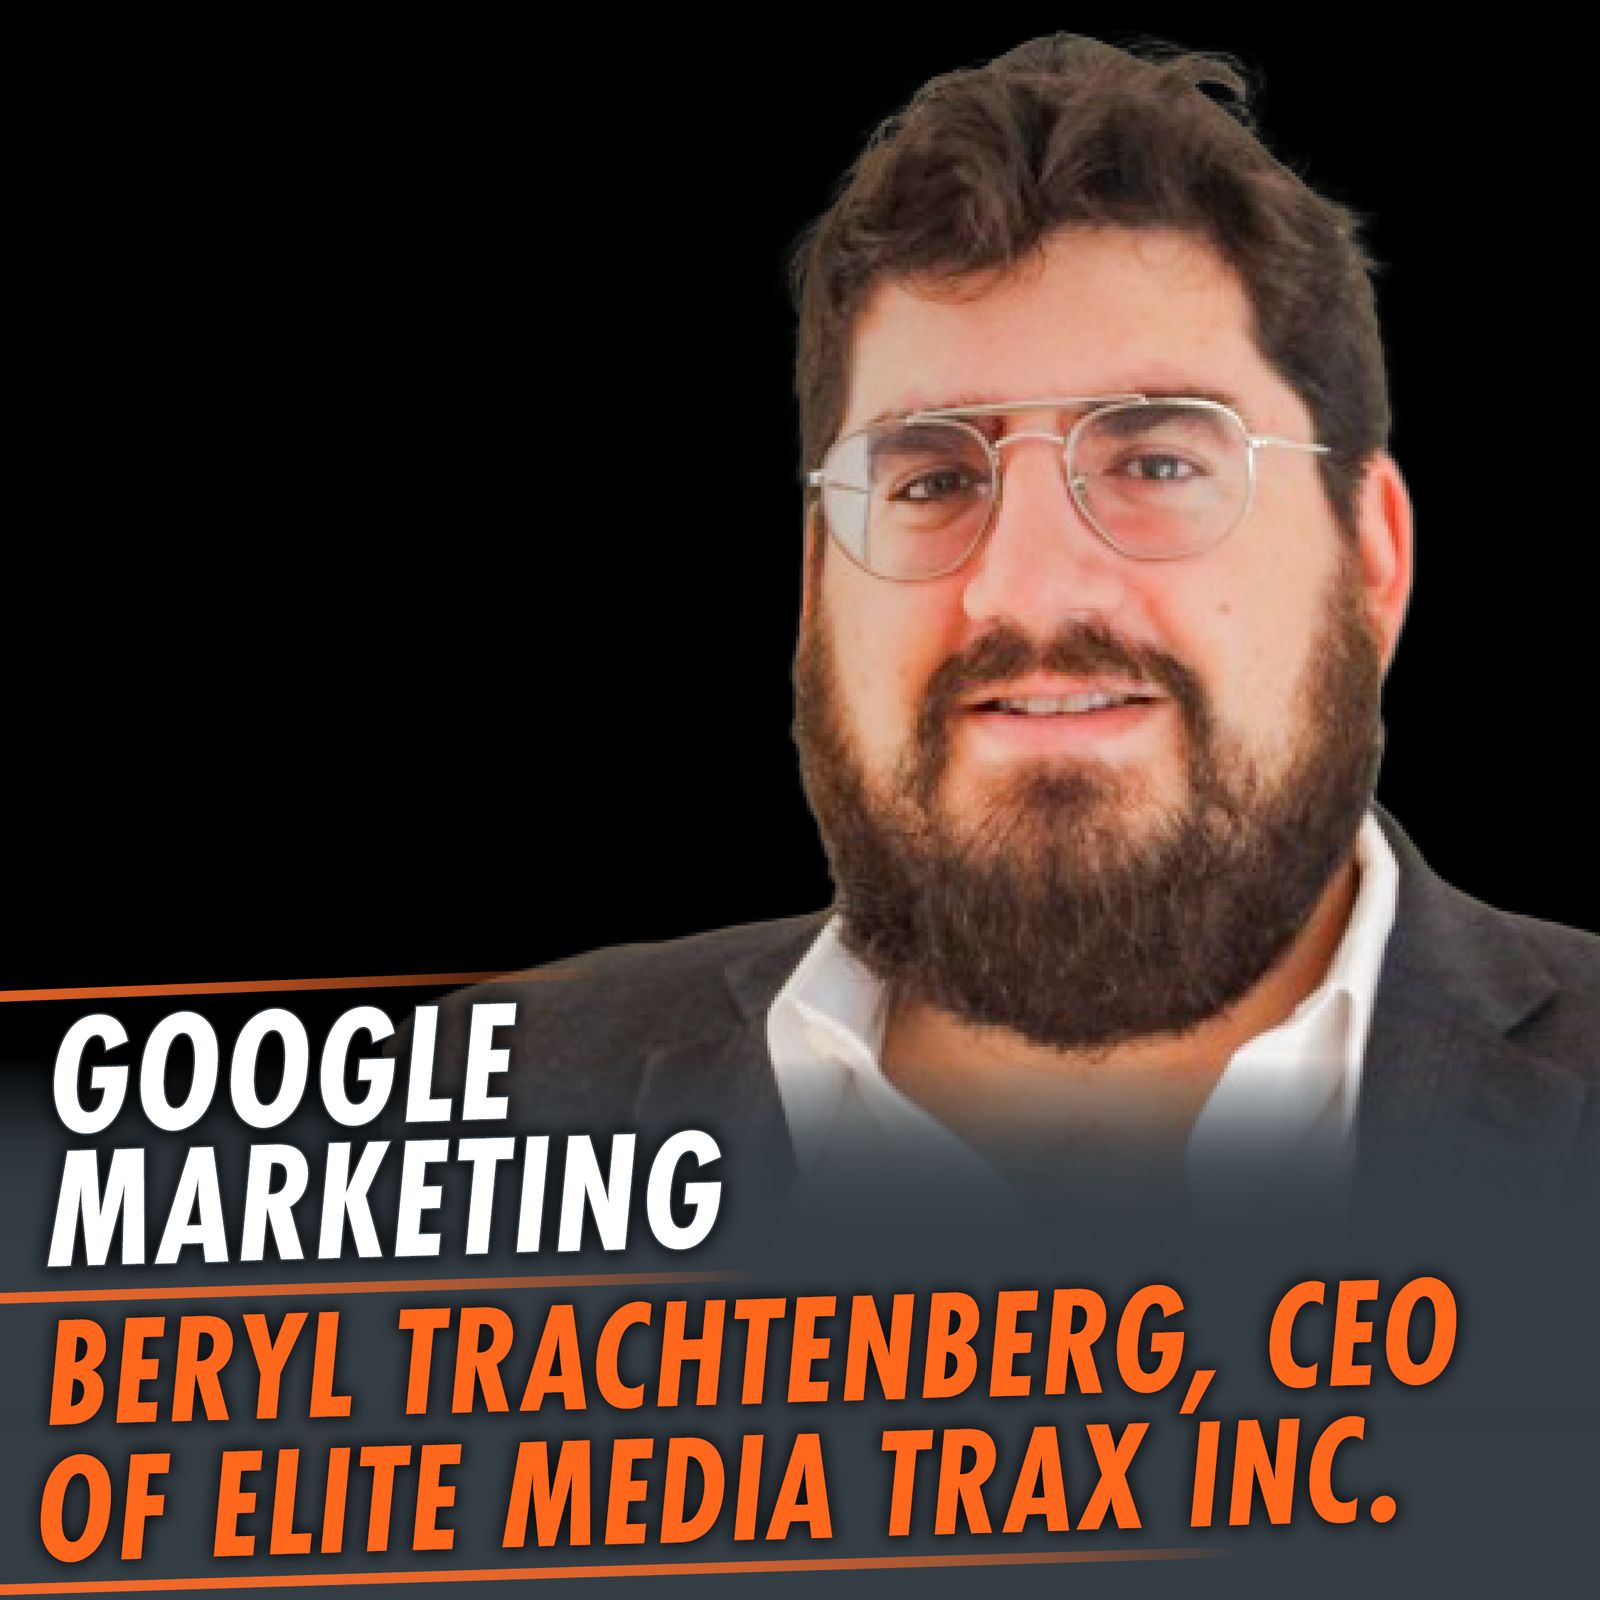 353: Google Marketing featuring Beryl Trachtenberg, CEO of Elite Media Trax Inc.